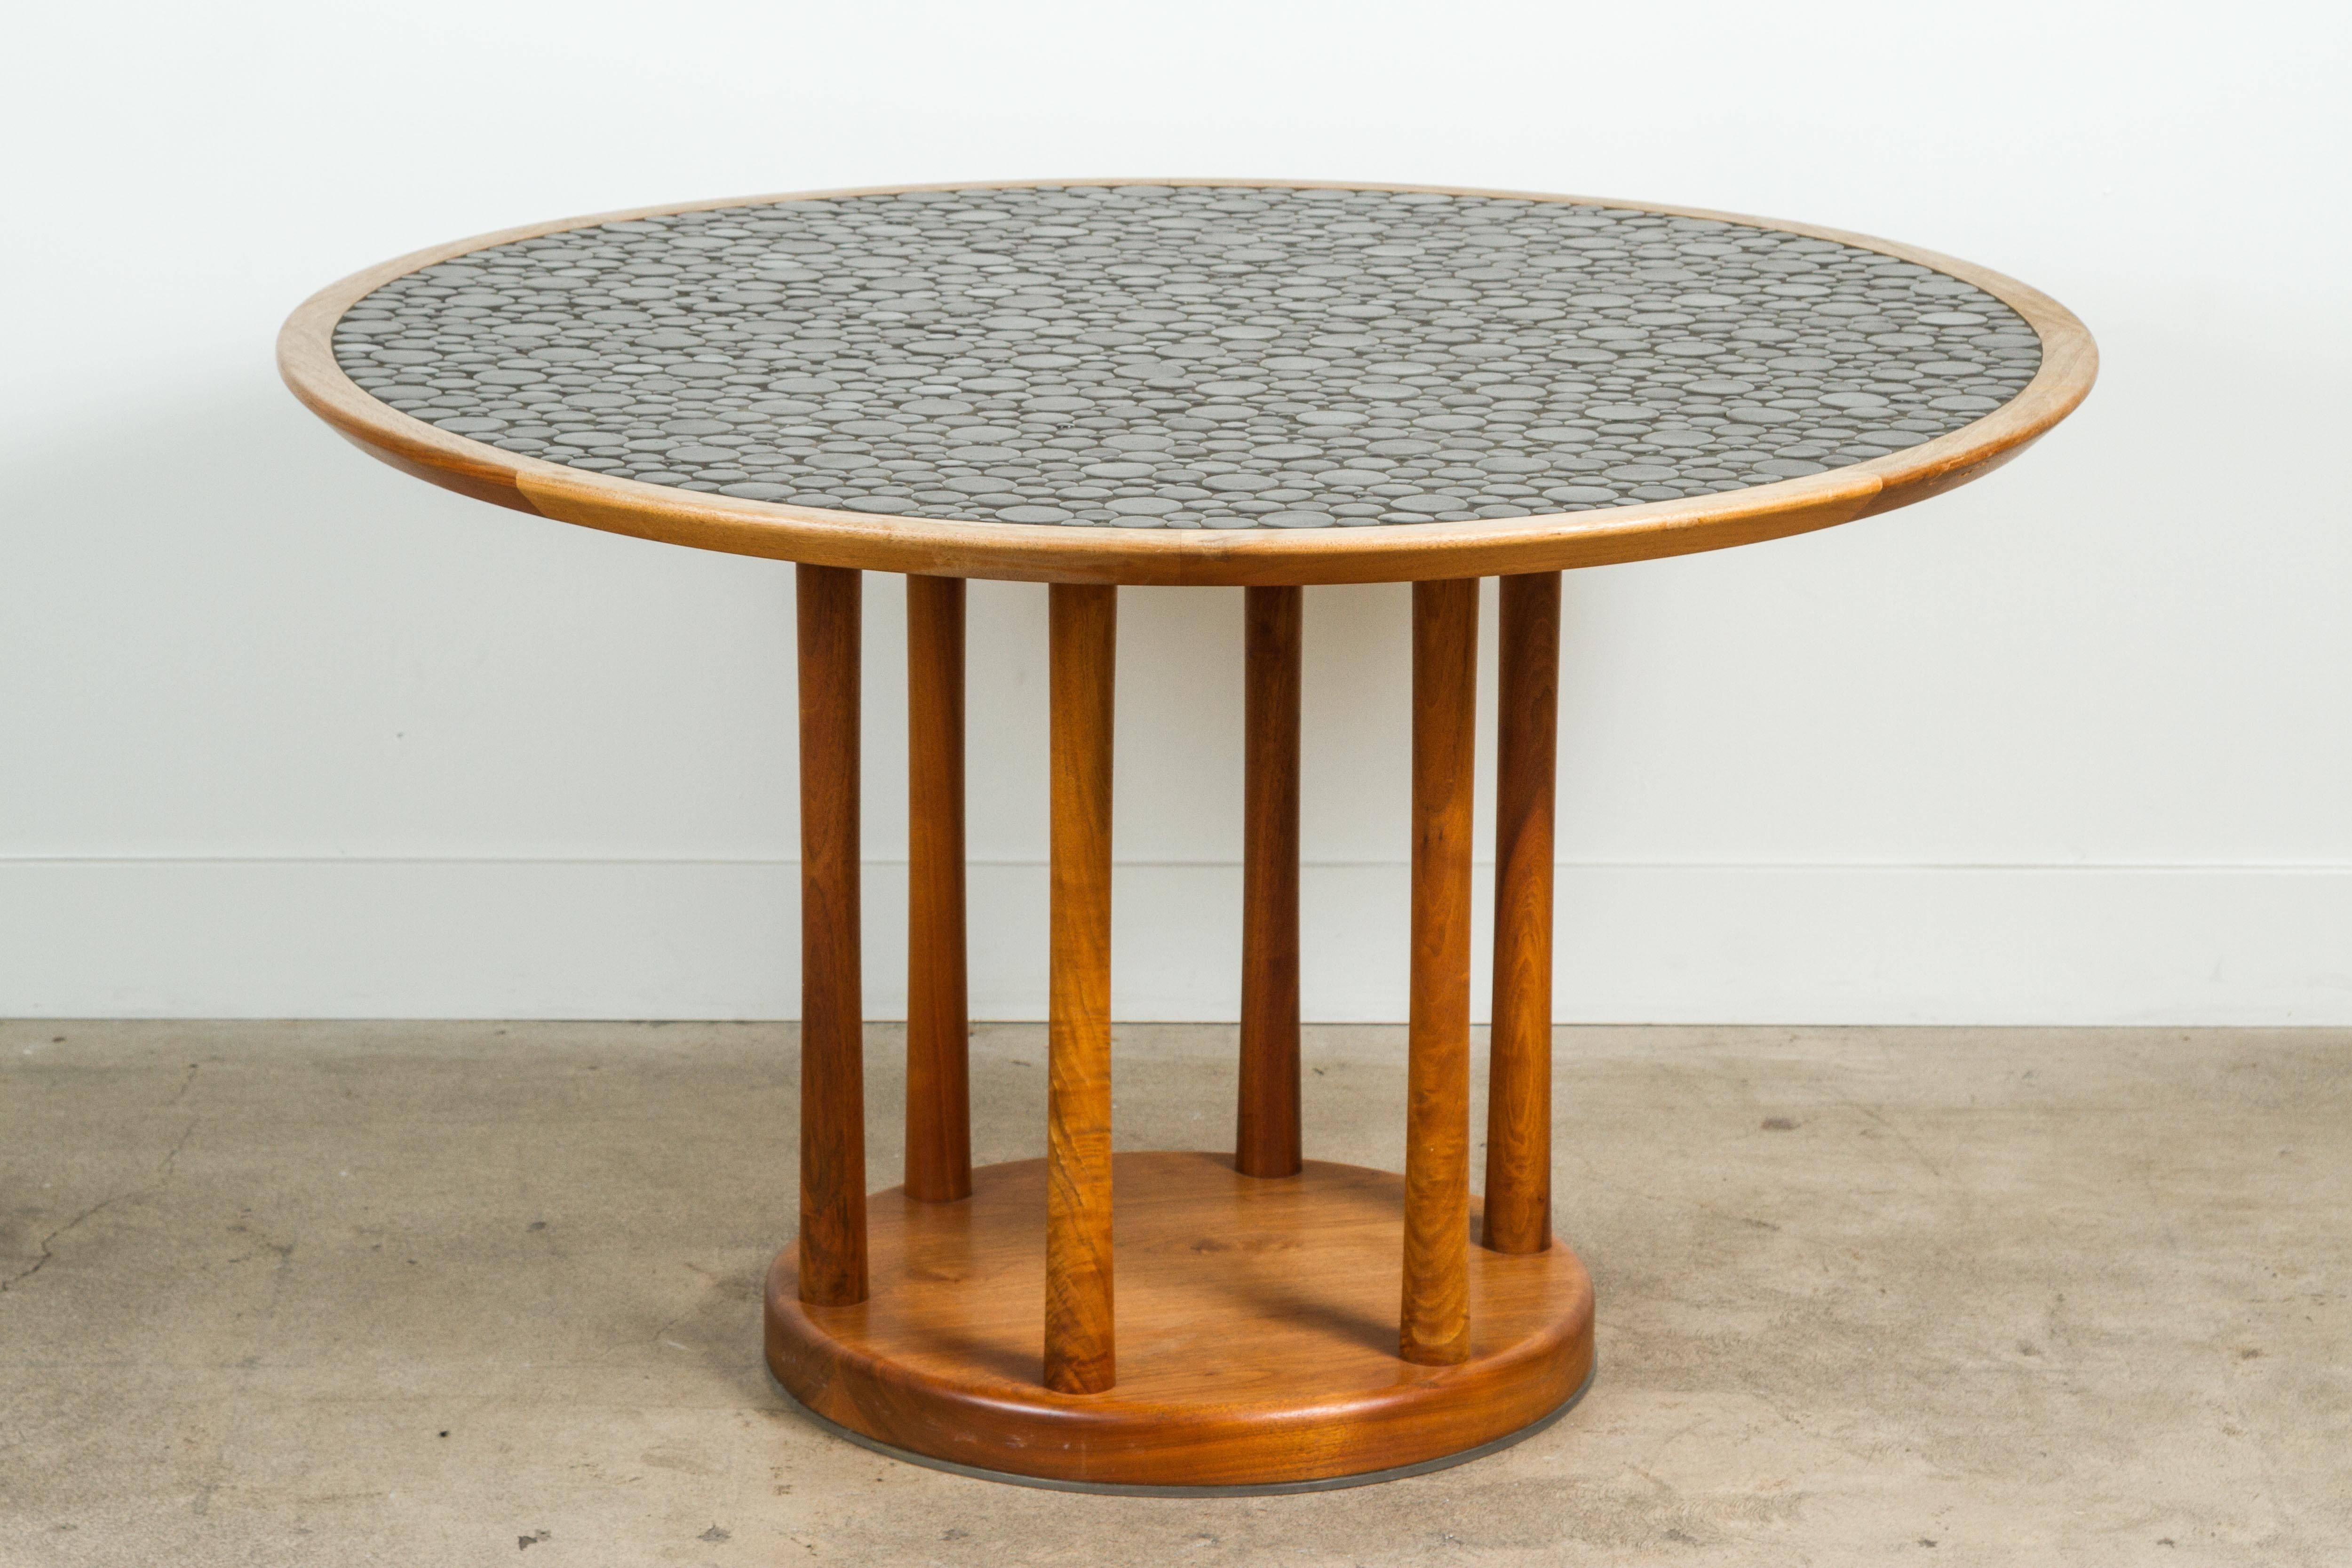 Round walnut and studio tiled centre table by Jane & Gordon Martz for Marshall Studio.